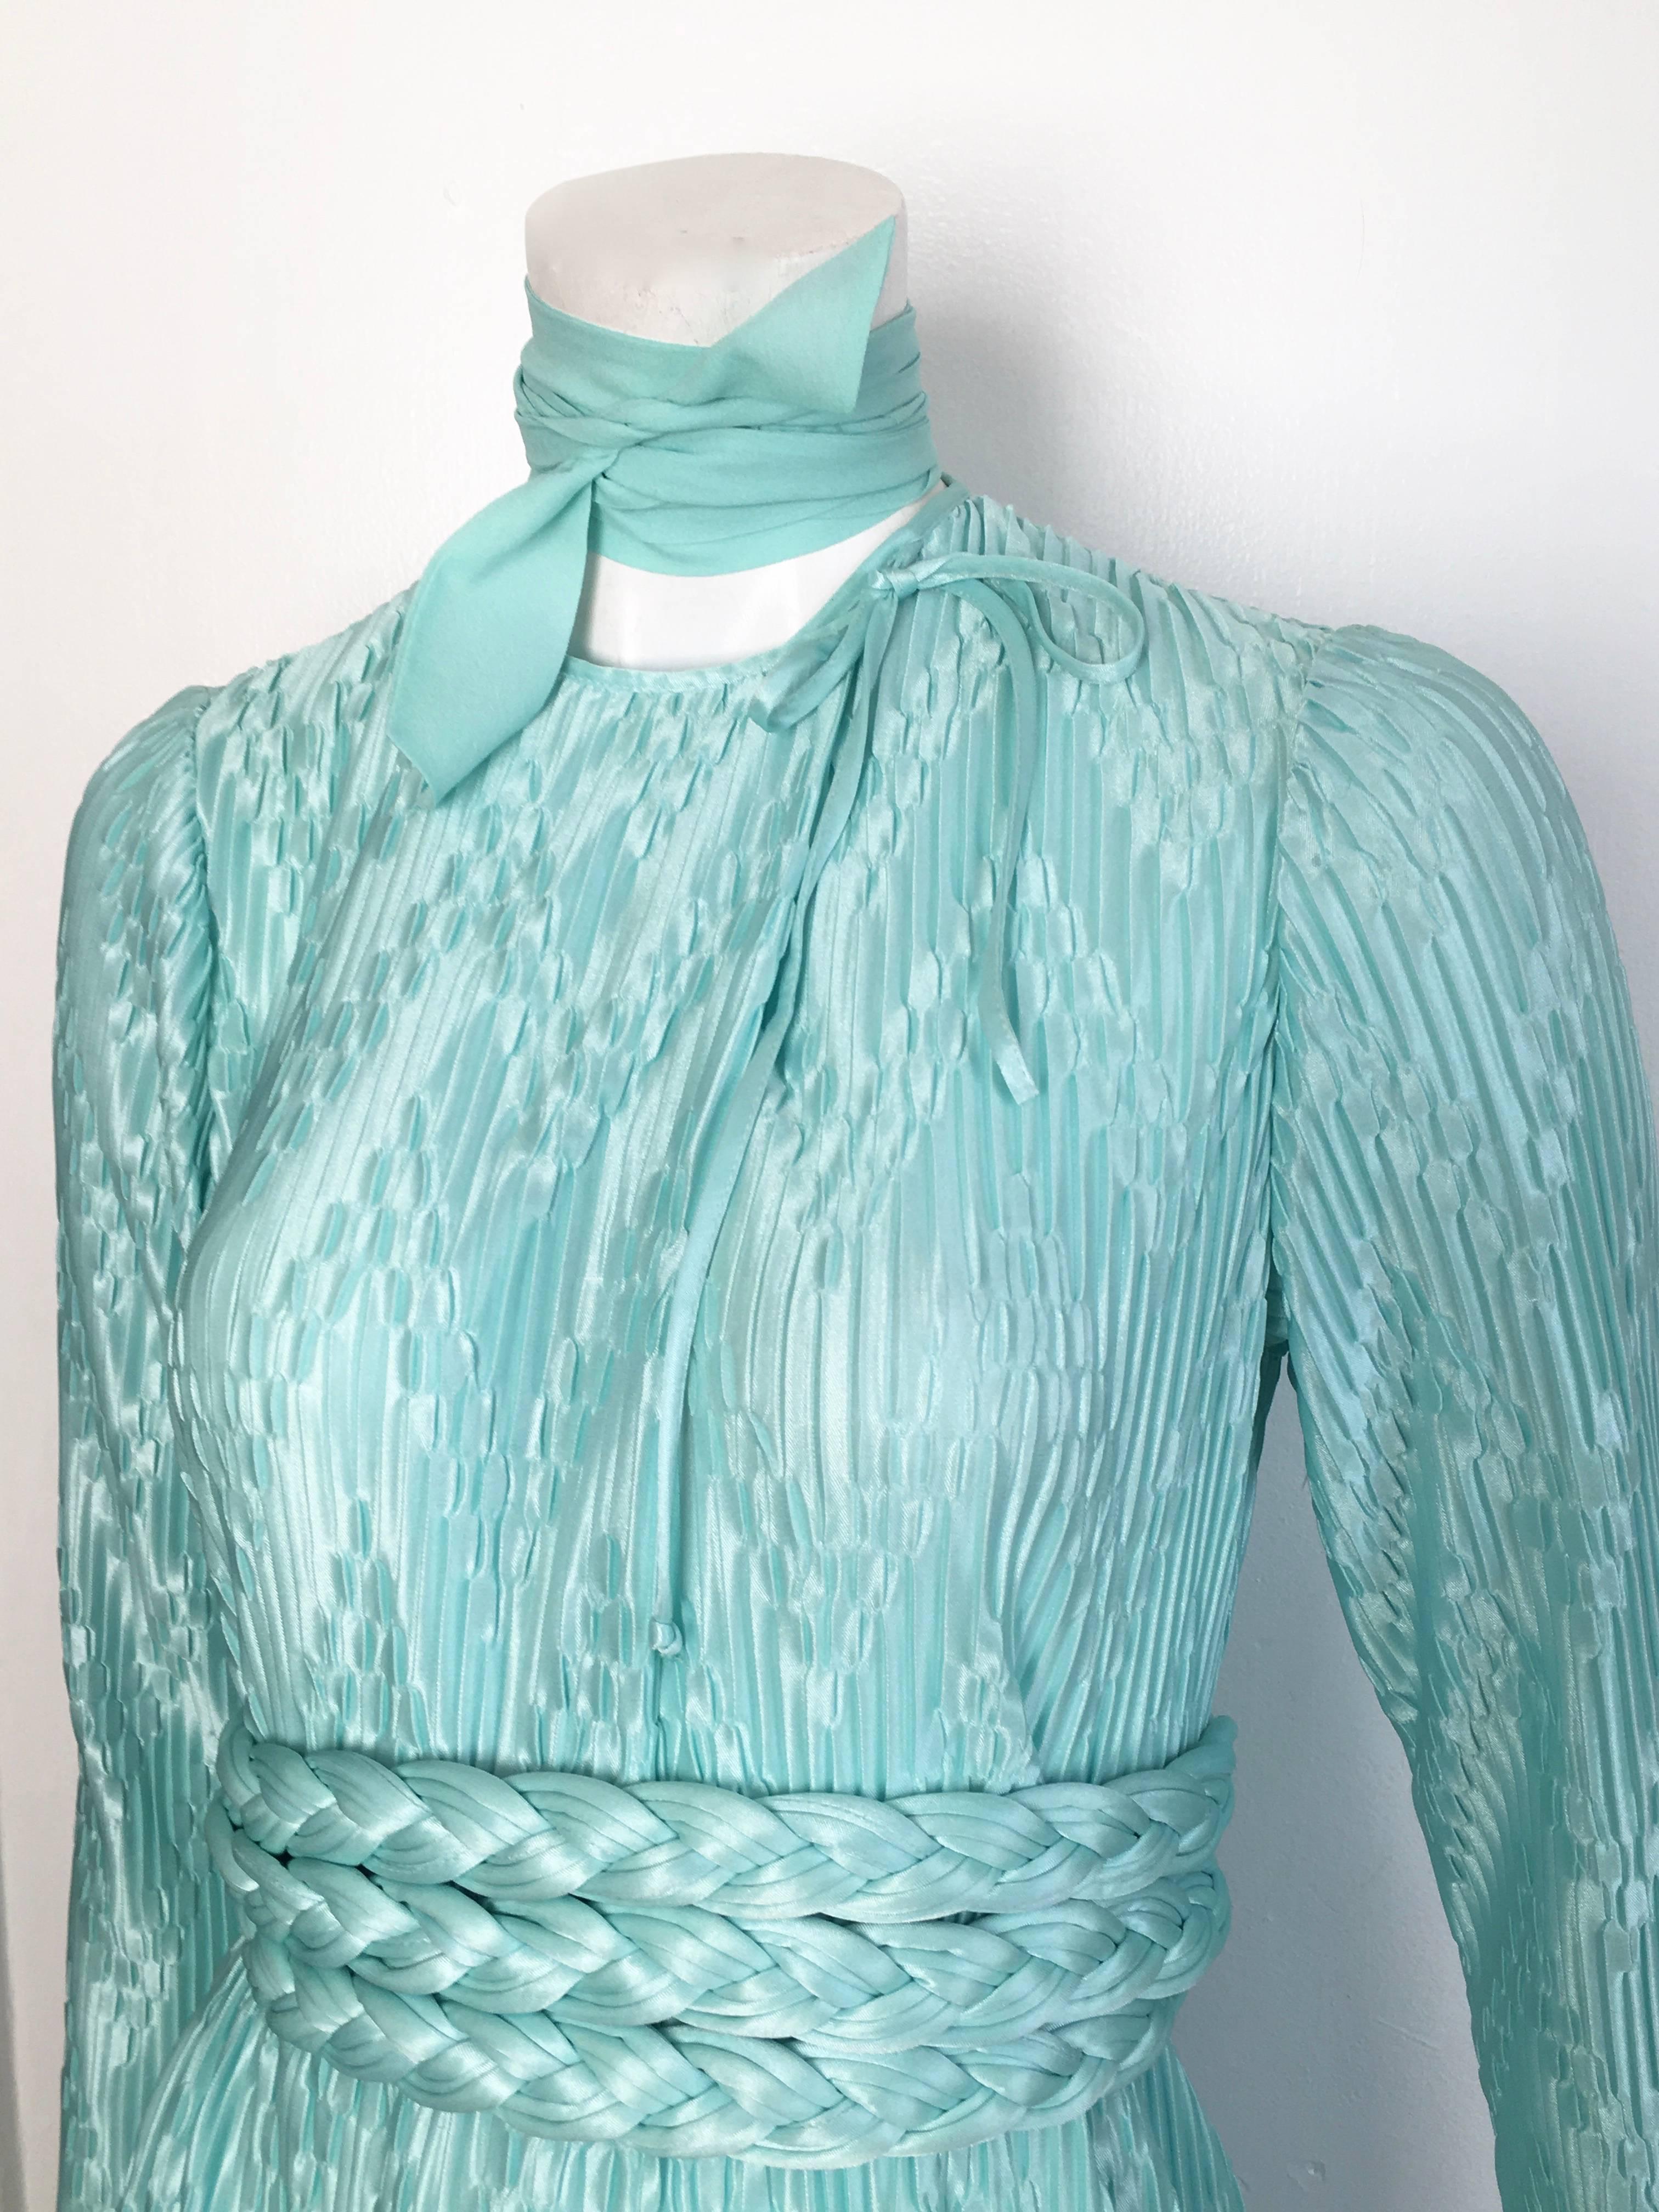 Mary McFadden for Bonwit Teller 1970s Aqua Maxi Dress with Belt Size Small.  4